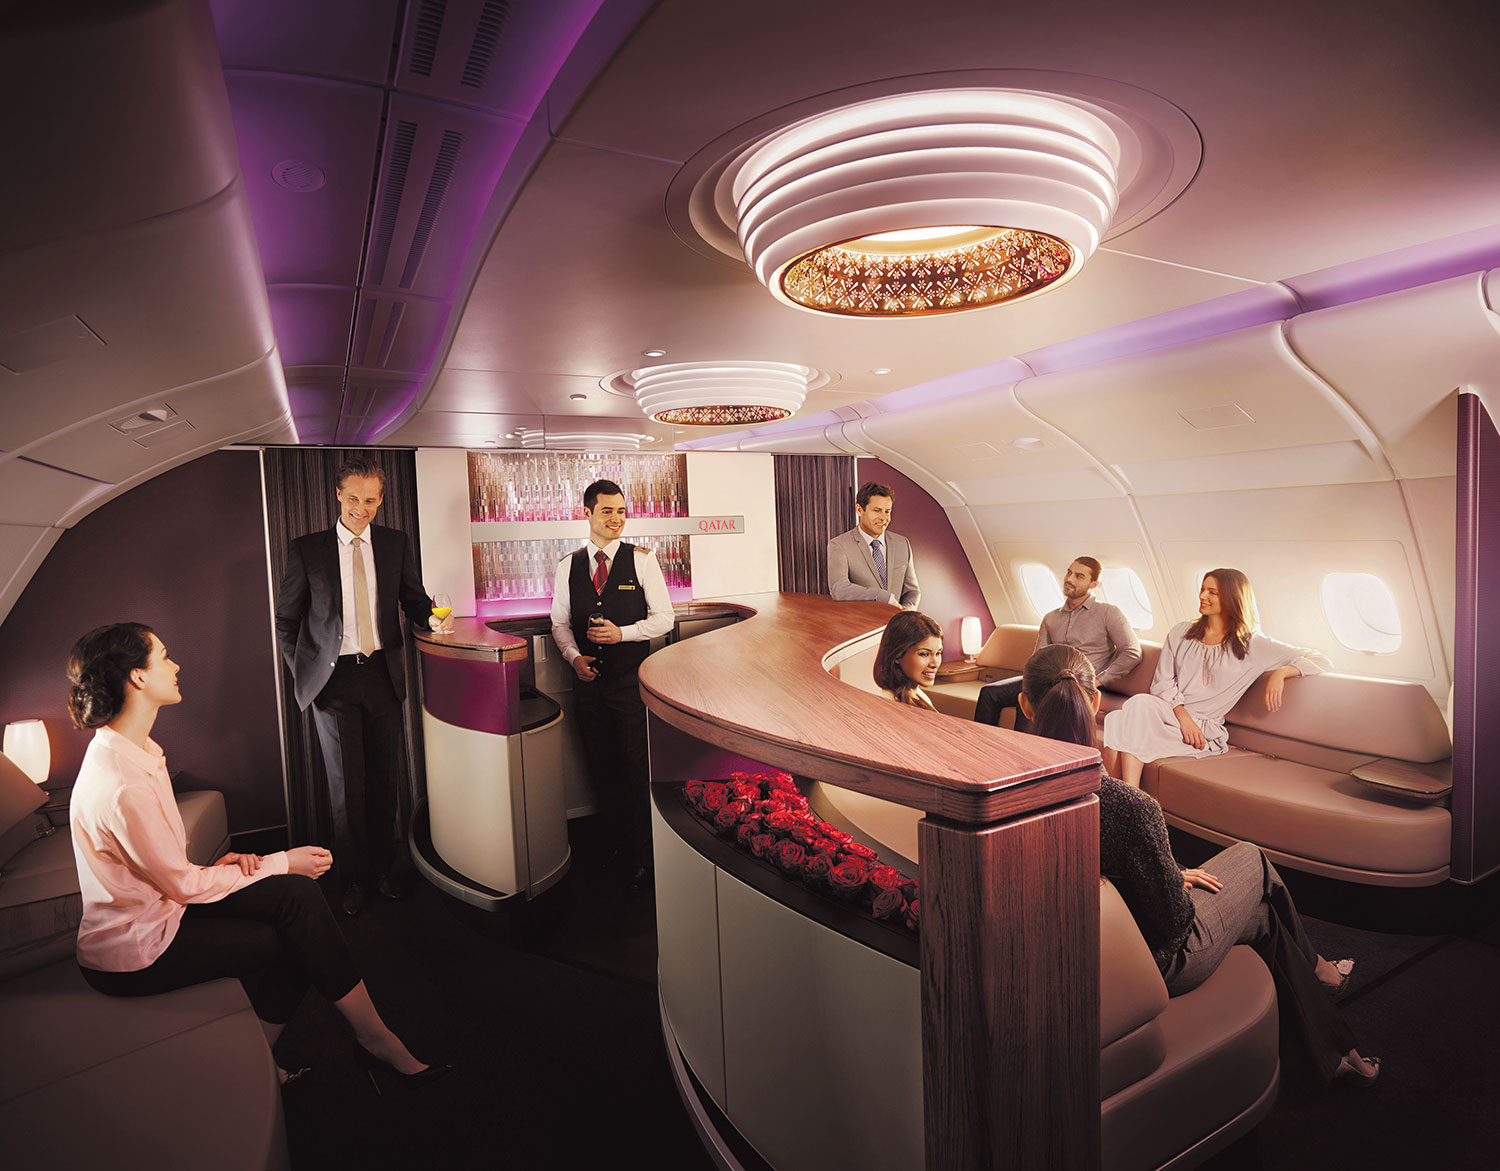 Sanctuary Lounge on board Qatar Airways’ A380 aircraft